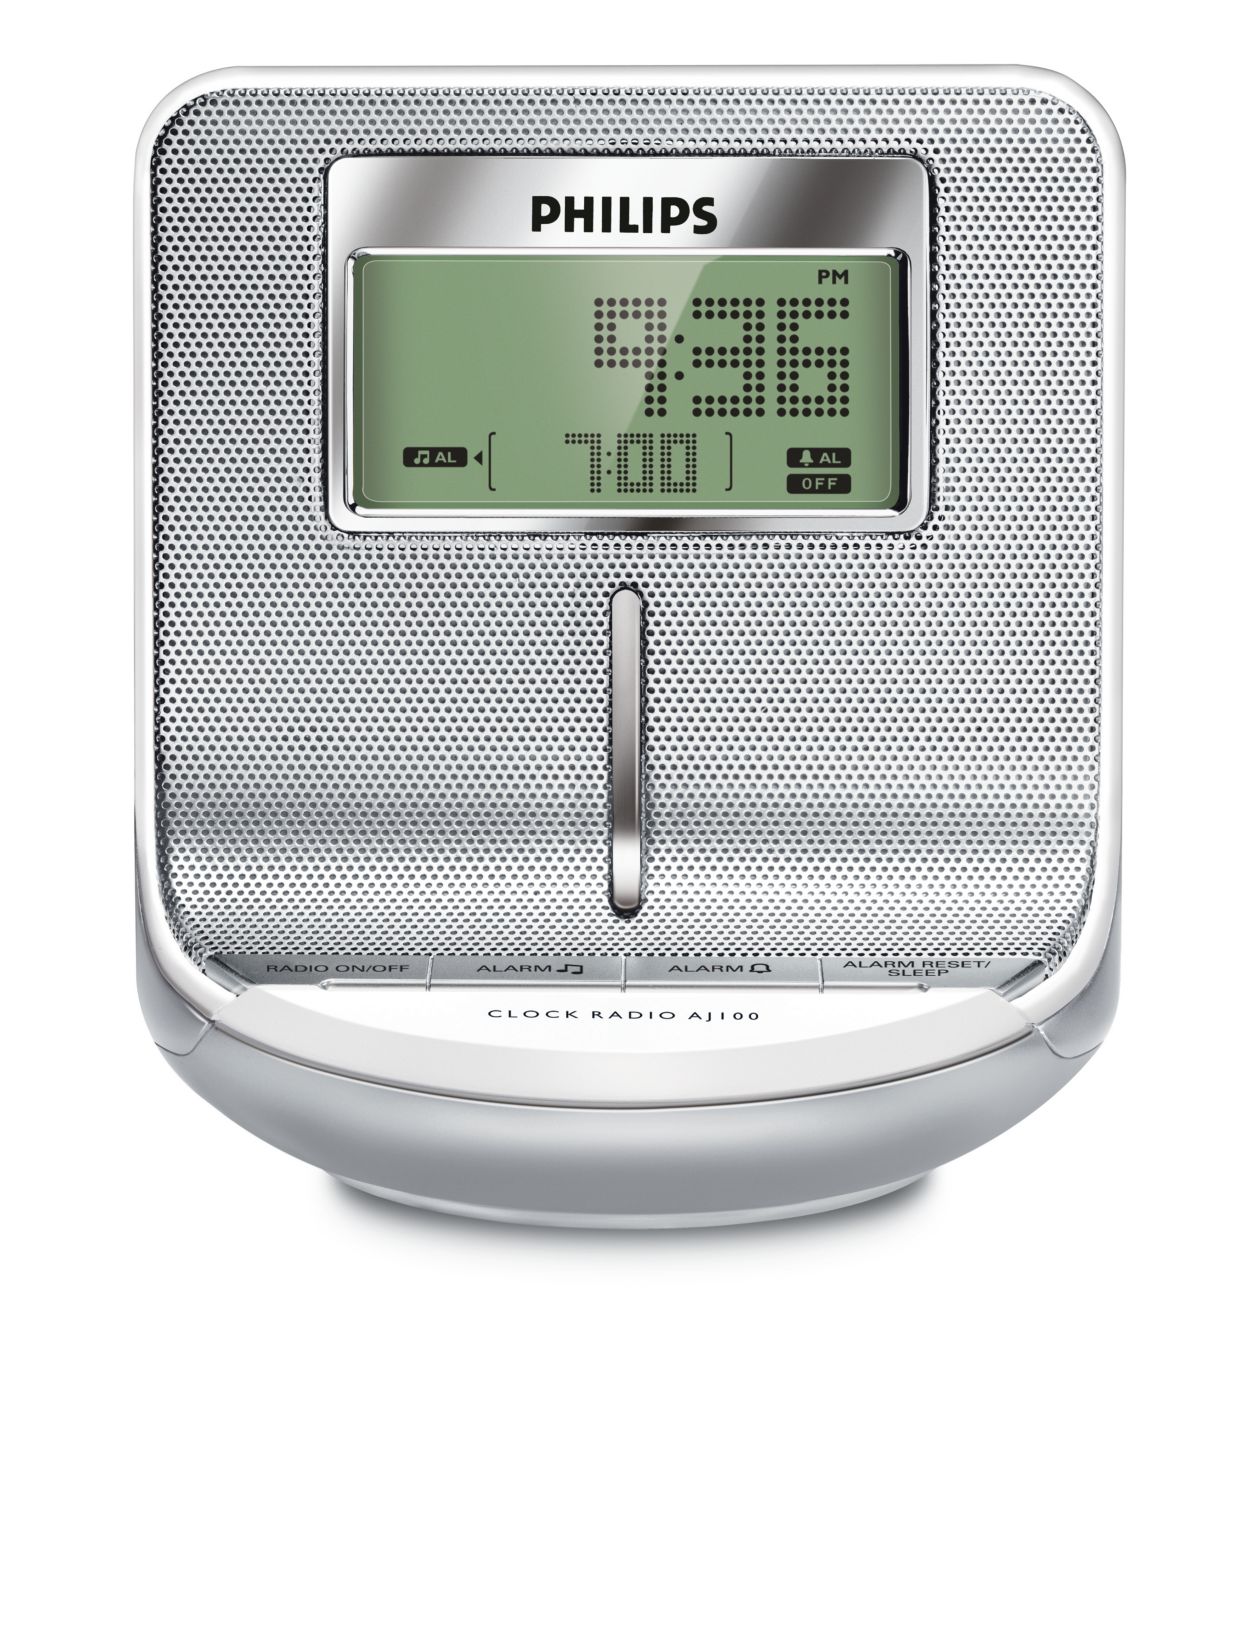 Philips clock radio -  España